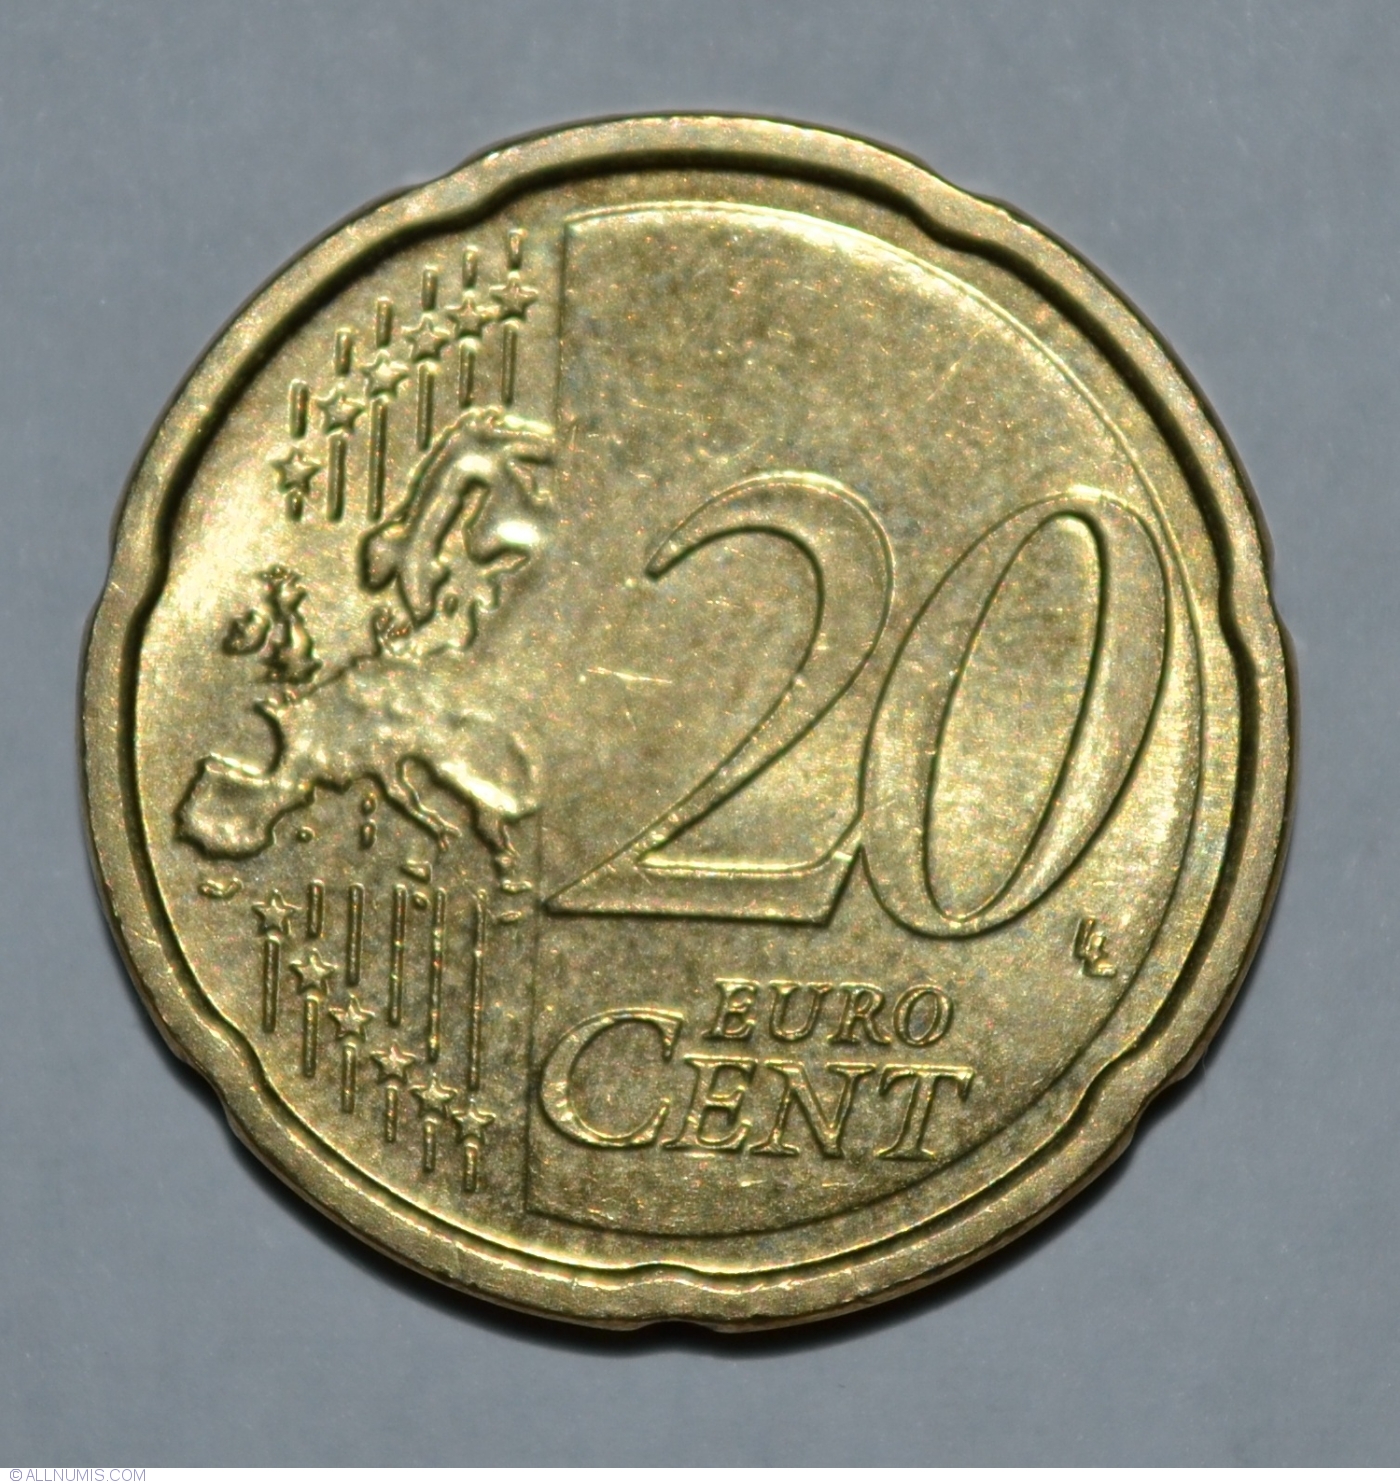 2002 20 euro cent worth germany